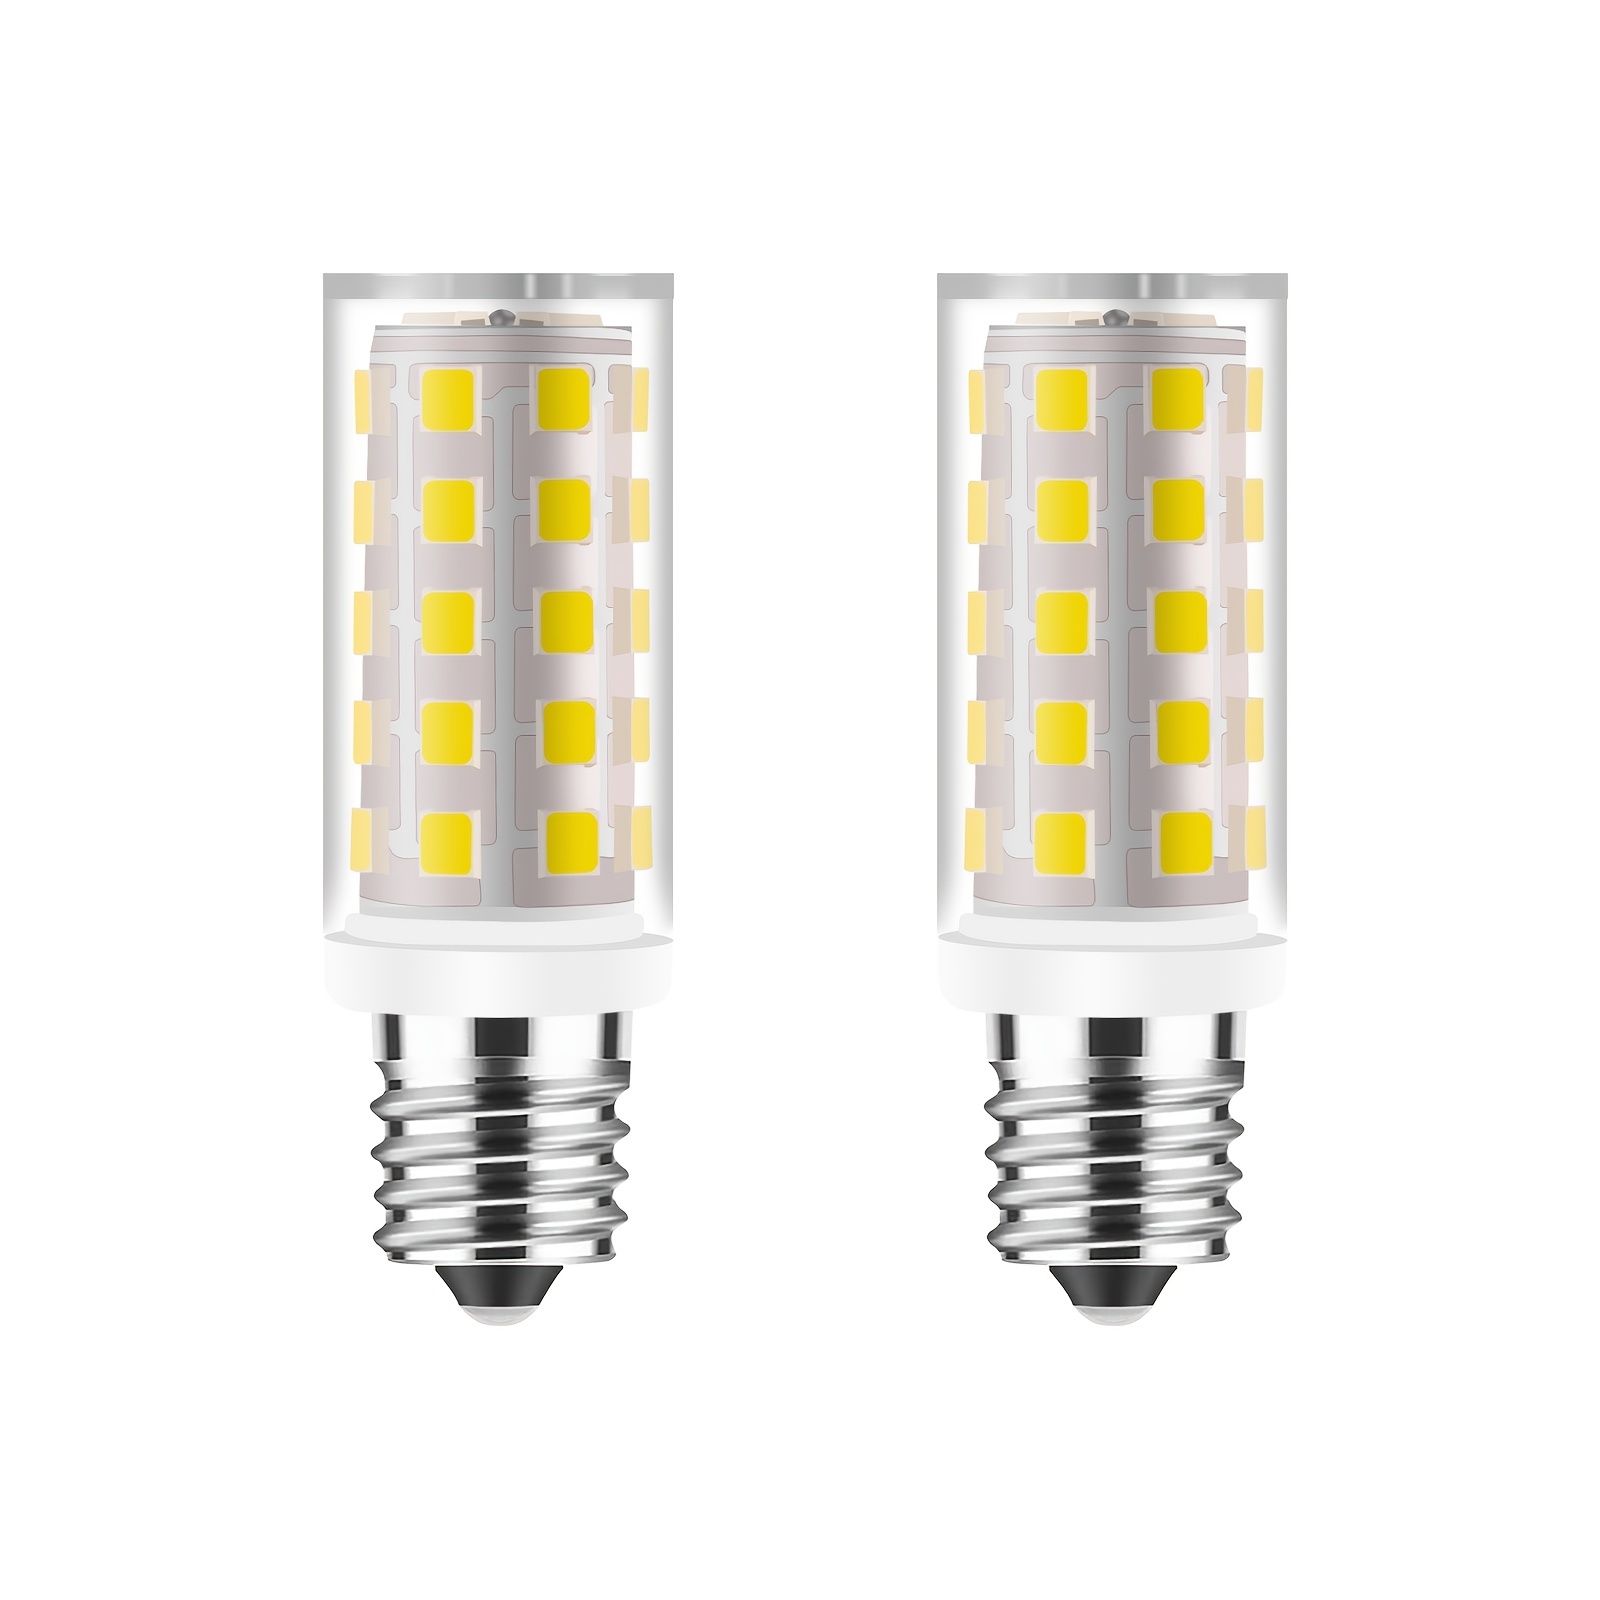 Winflo 2W 12V Energy Saver LED Ultra-Bright Replacement Light Bulbs for Range Hoods (Set of 2)